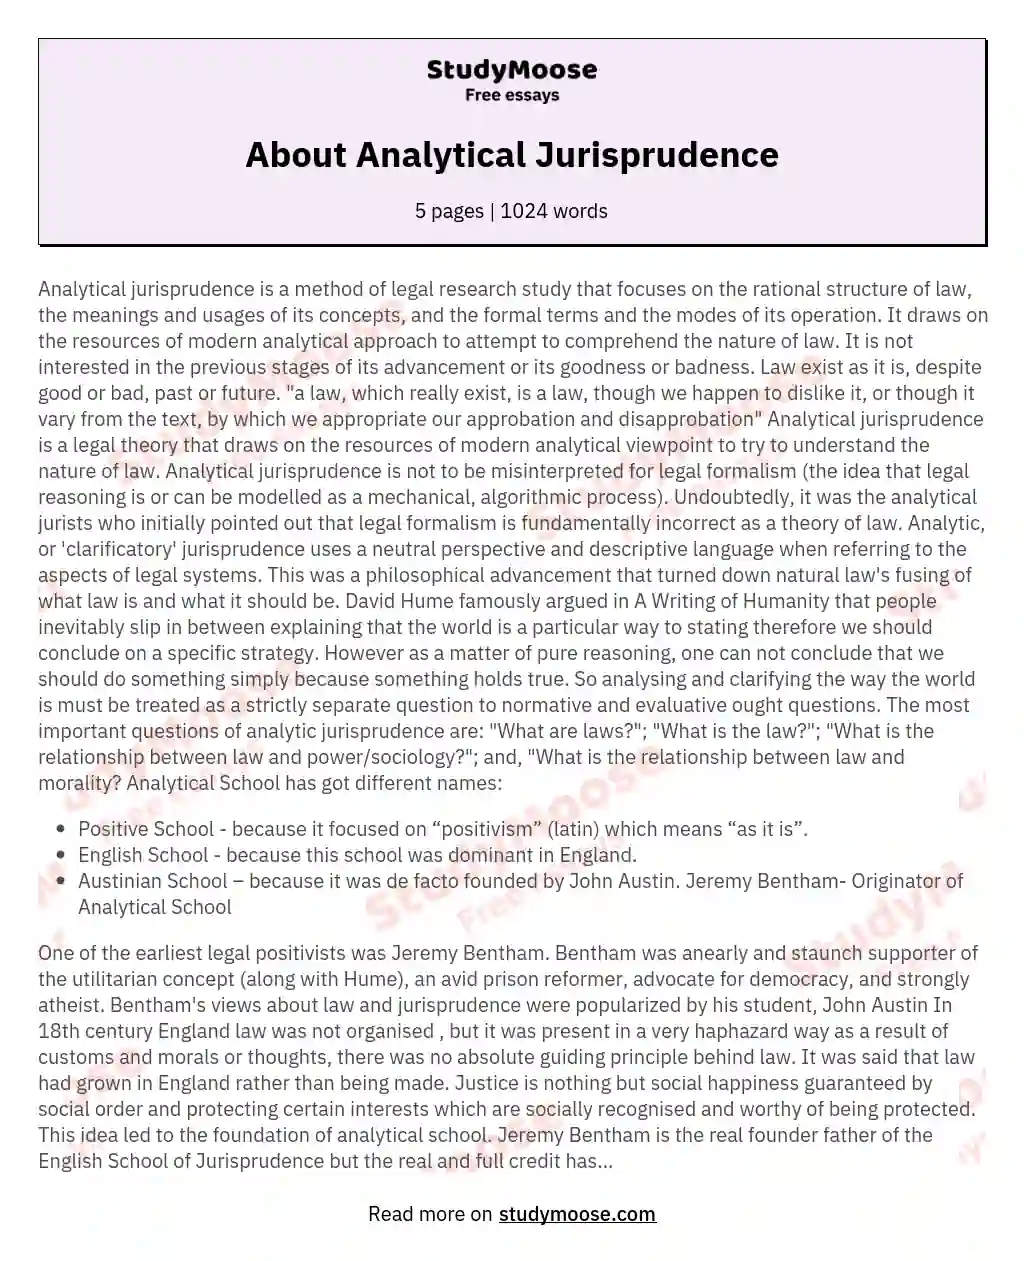 About Analytical Jurisprudence essay